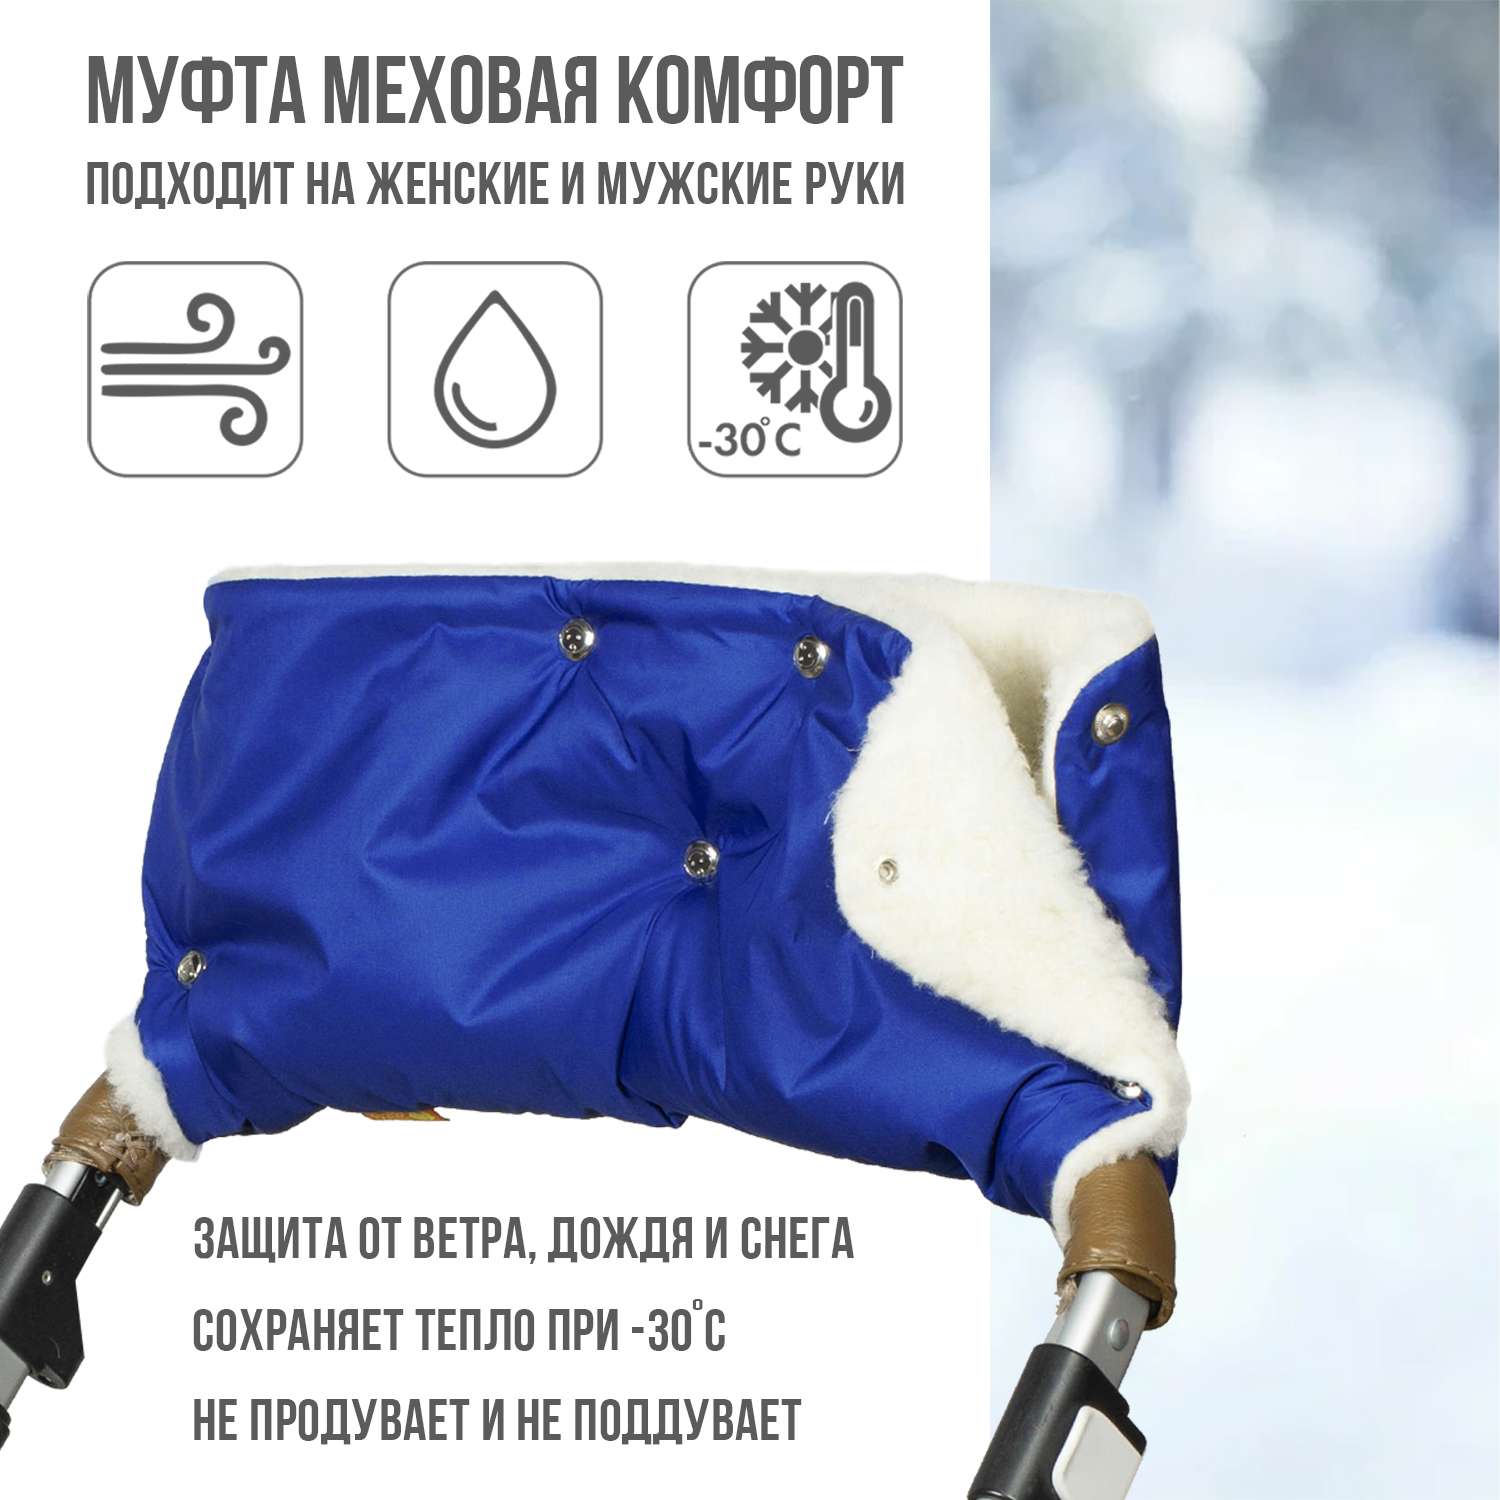 Муфта для коляски Чудо-чадо на кнопках «Комфорт» мех синяя МКМ06-001 - фото 1